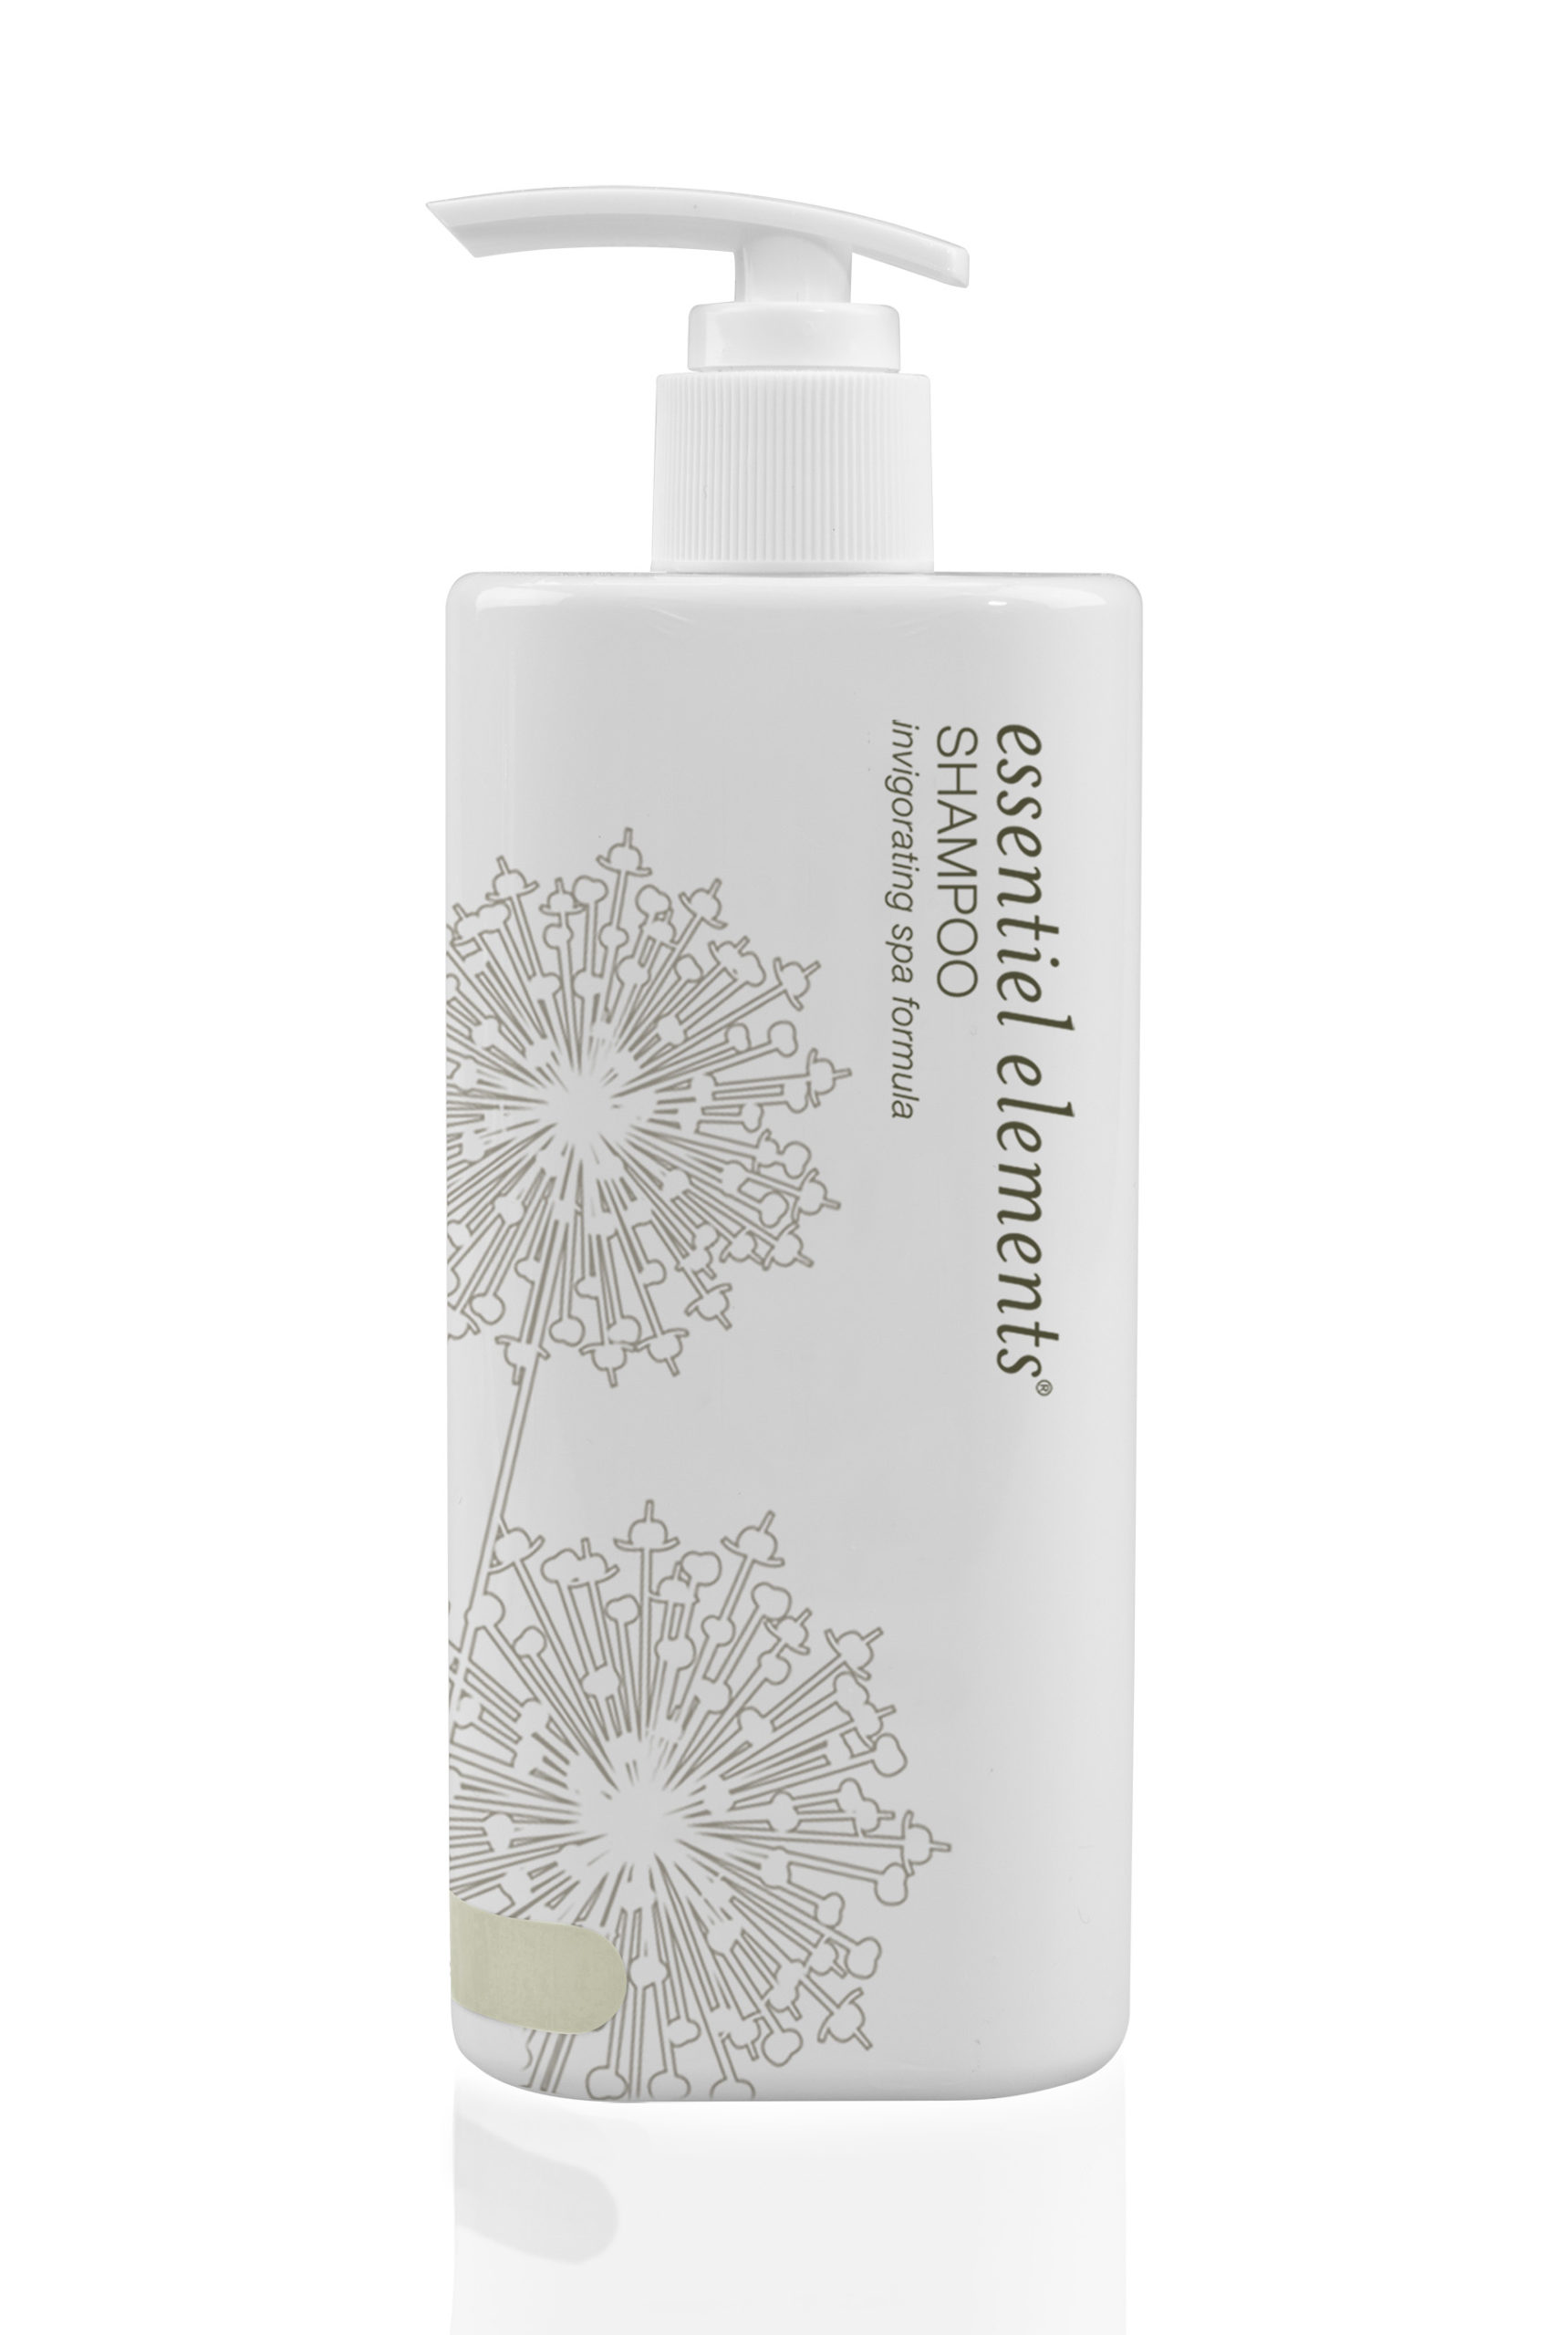 9.6oz/285ml Essential Elements Spa Shampoo Ultralux Dispenser Bottle